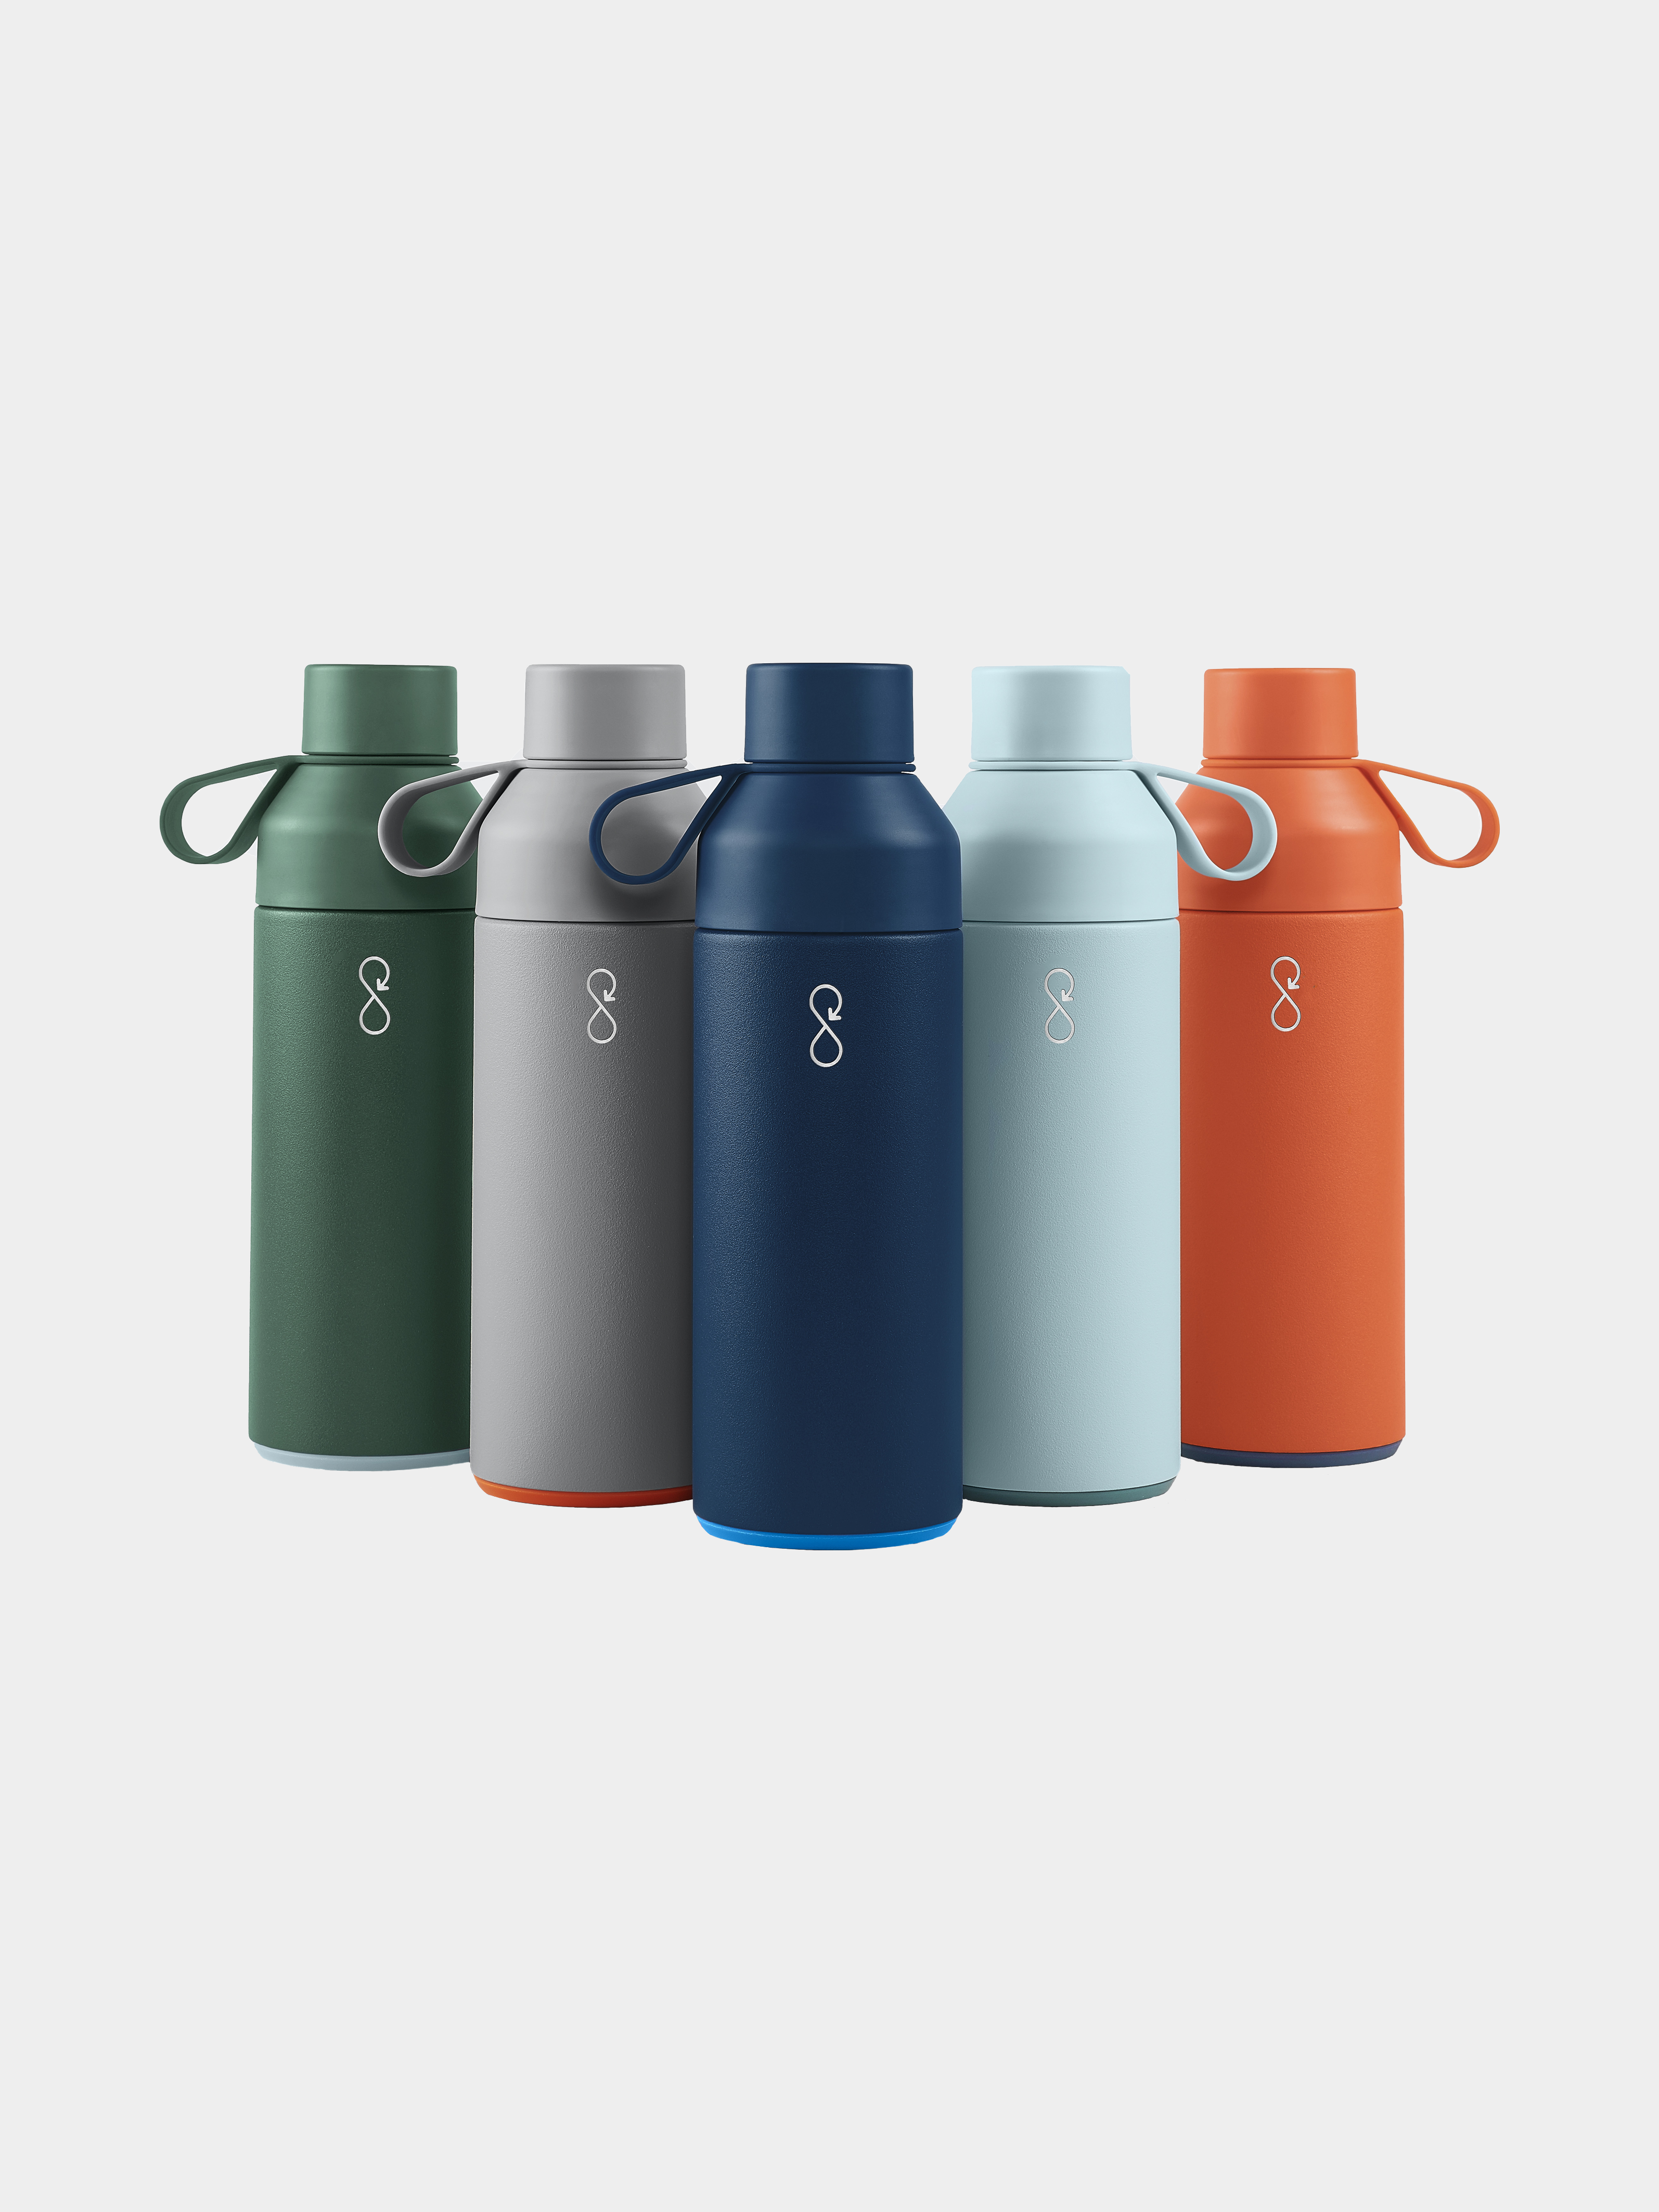 The Bottle Bag, Aqua & Orange